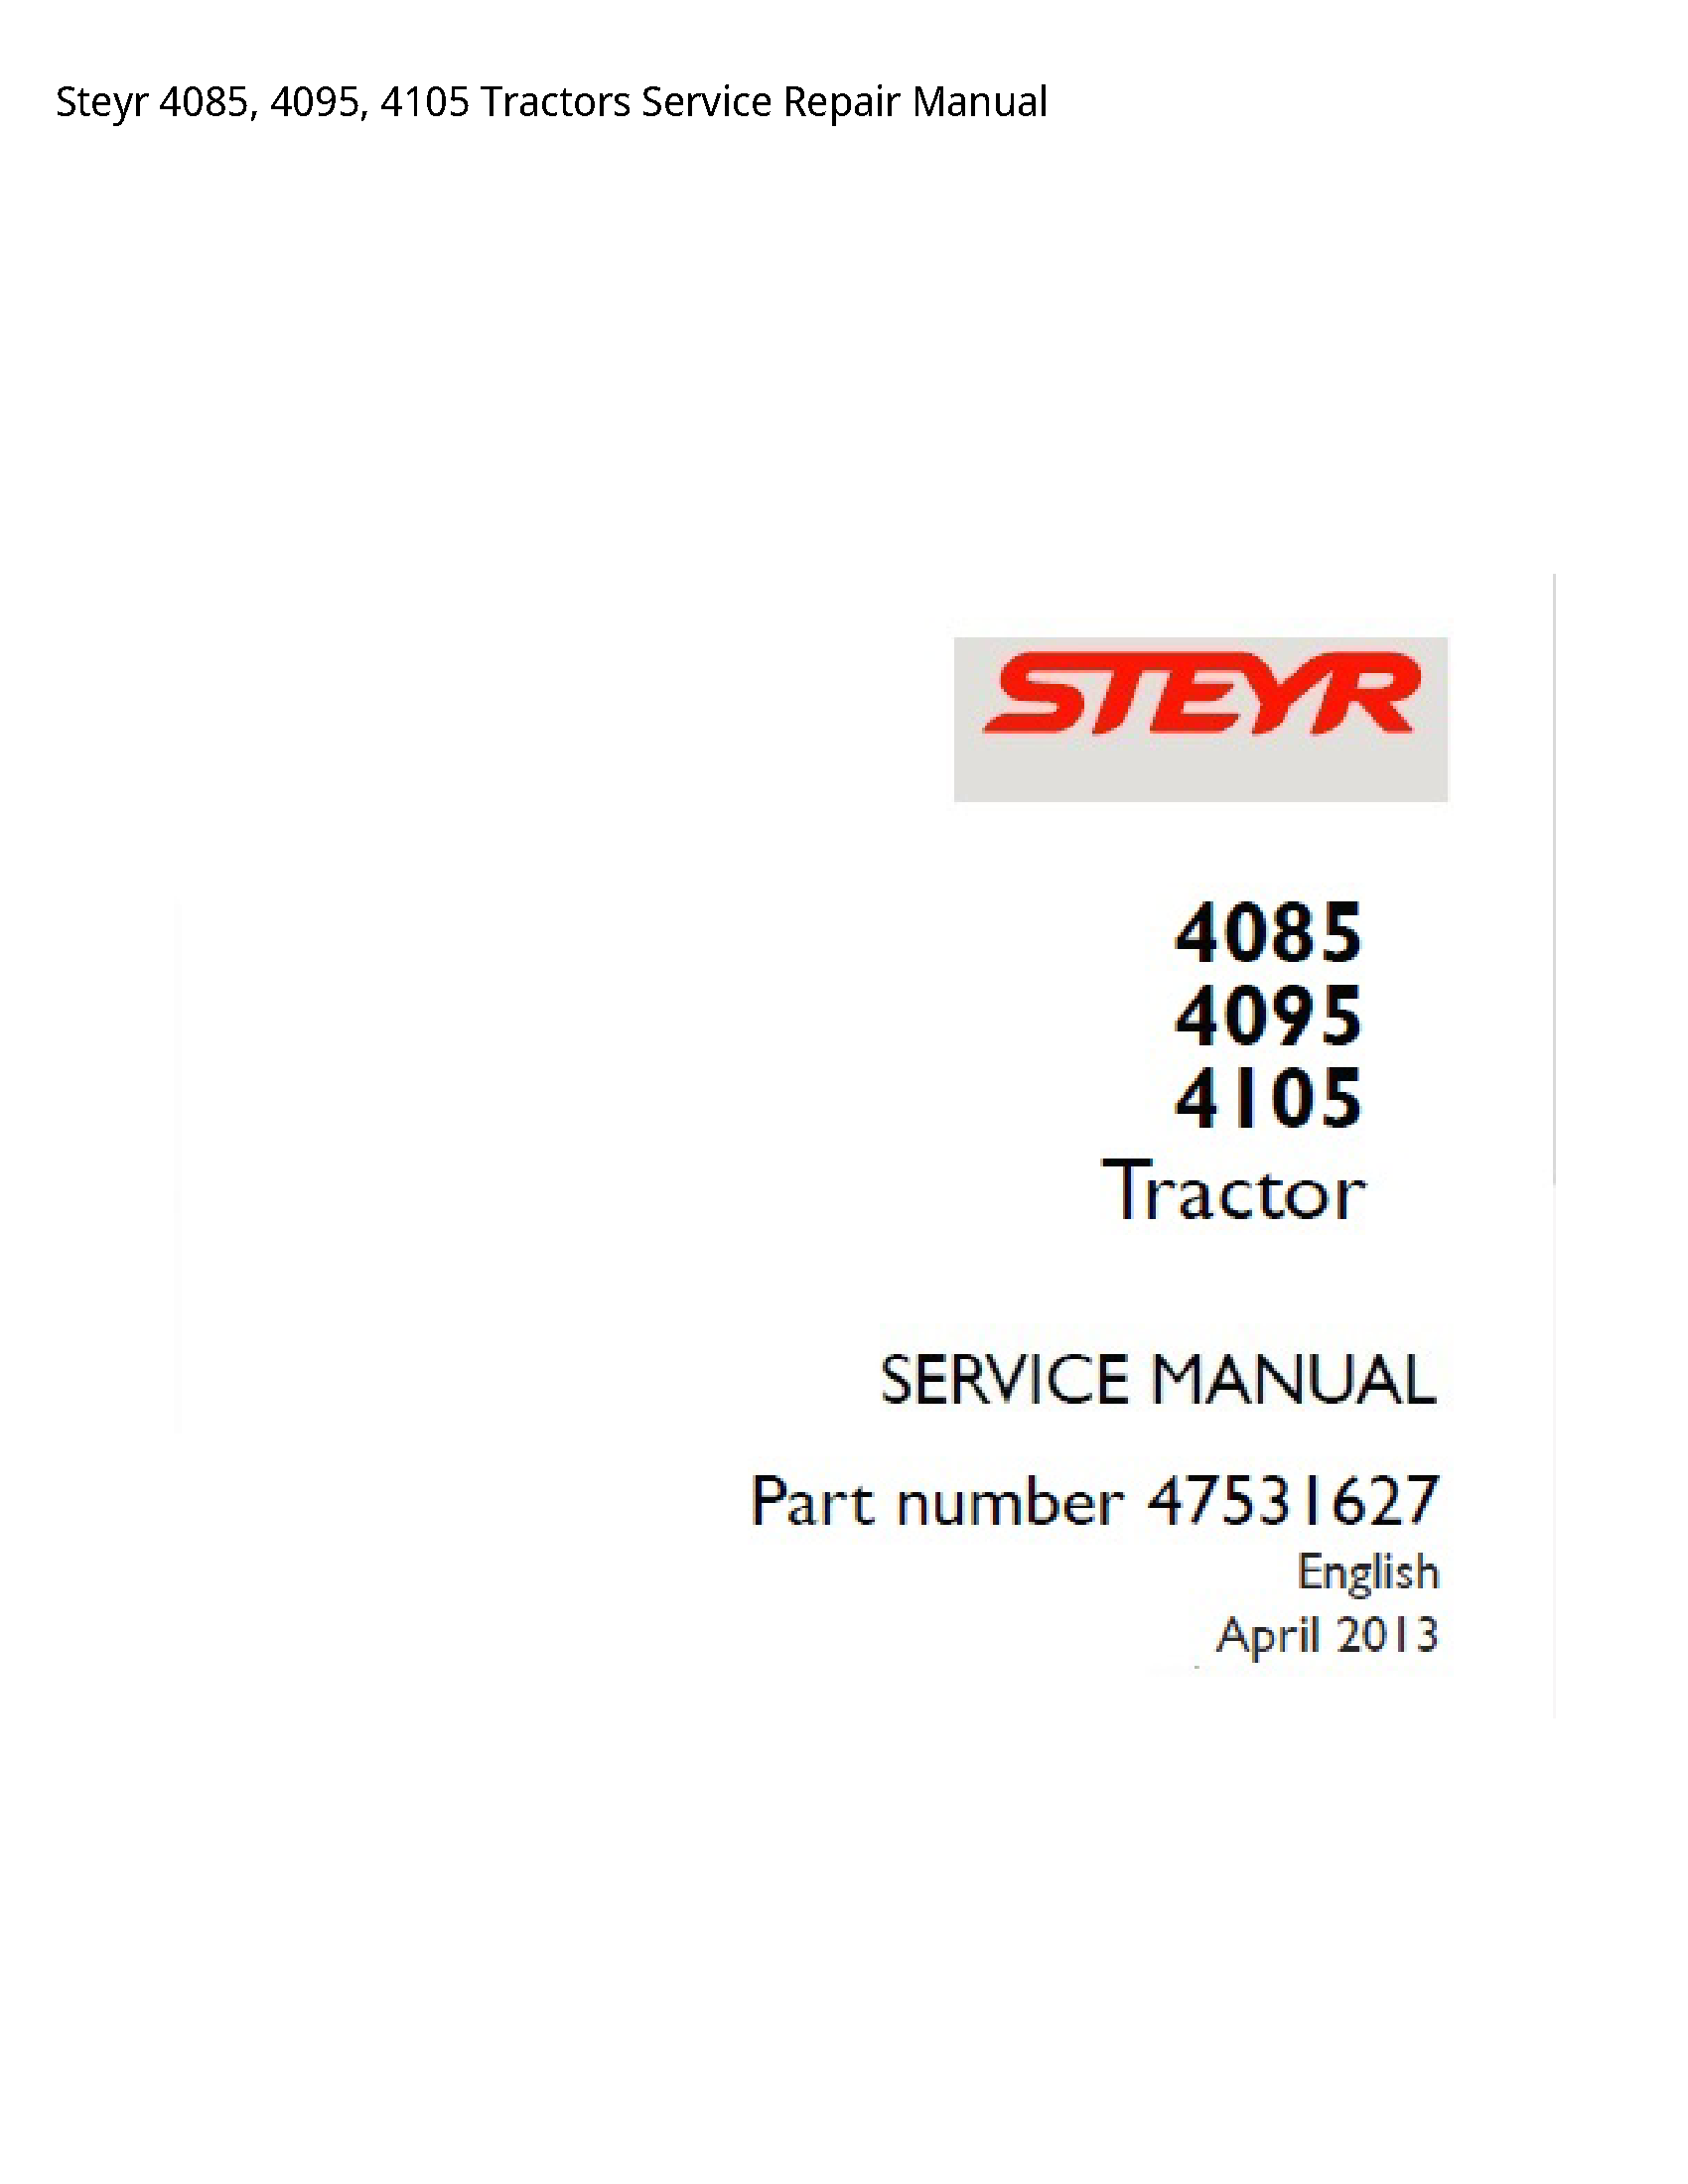 Steyr 4085 Tractors manual